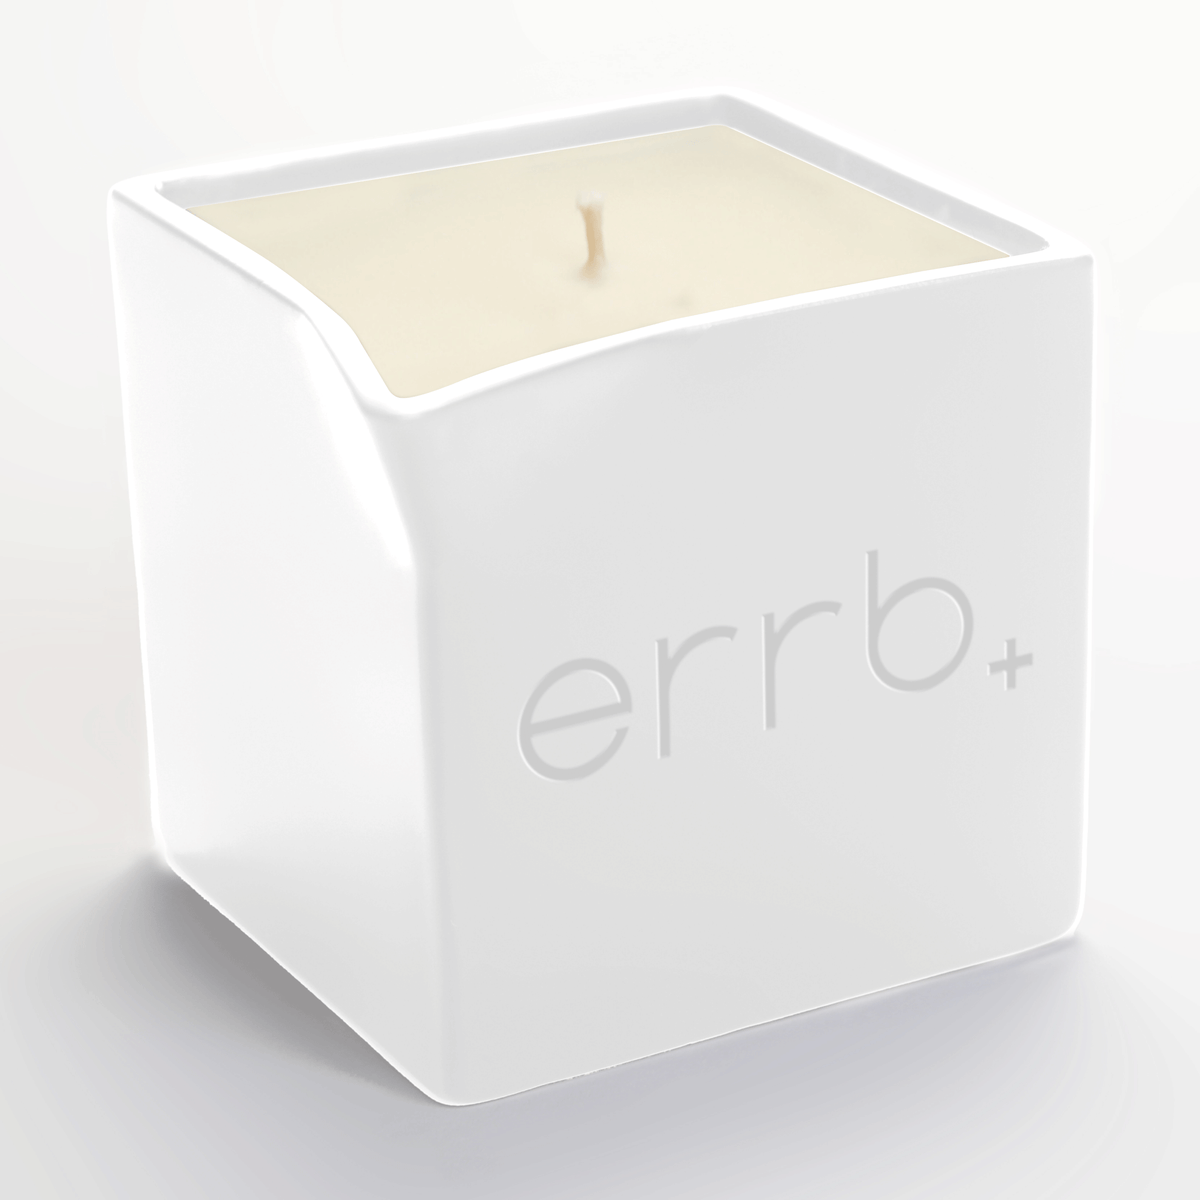 rb+ lavender massage candle – errbshop